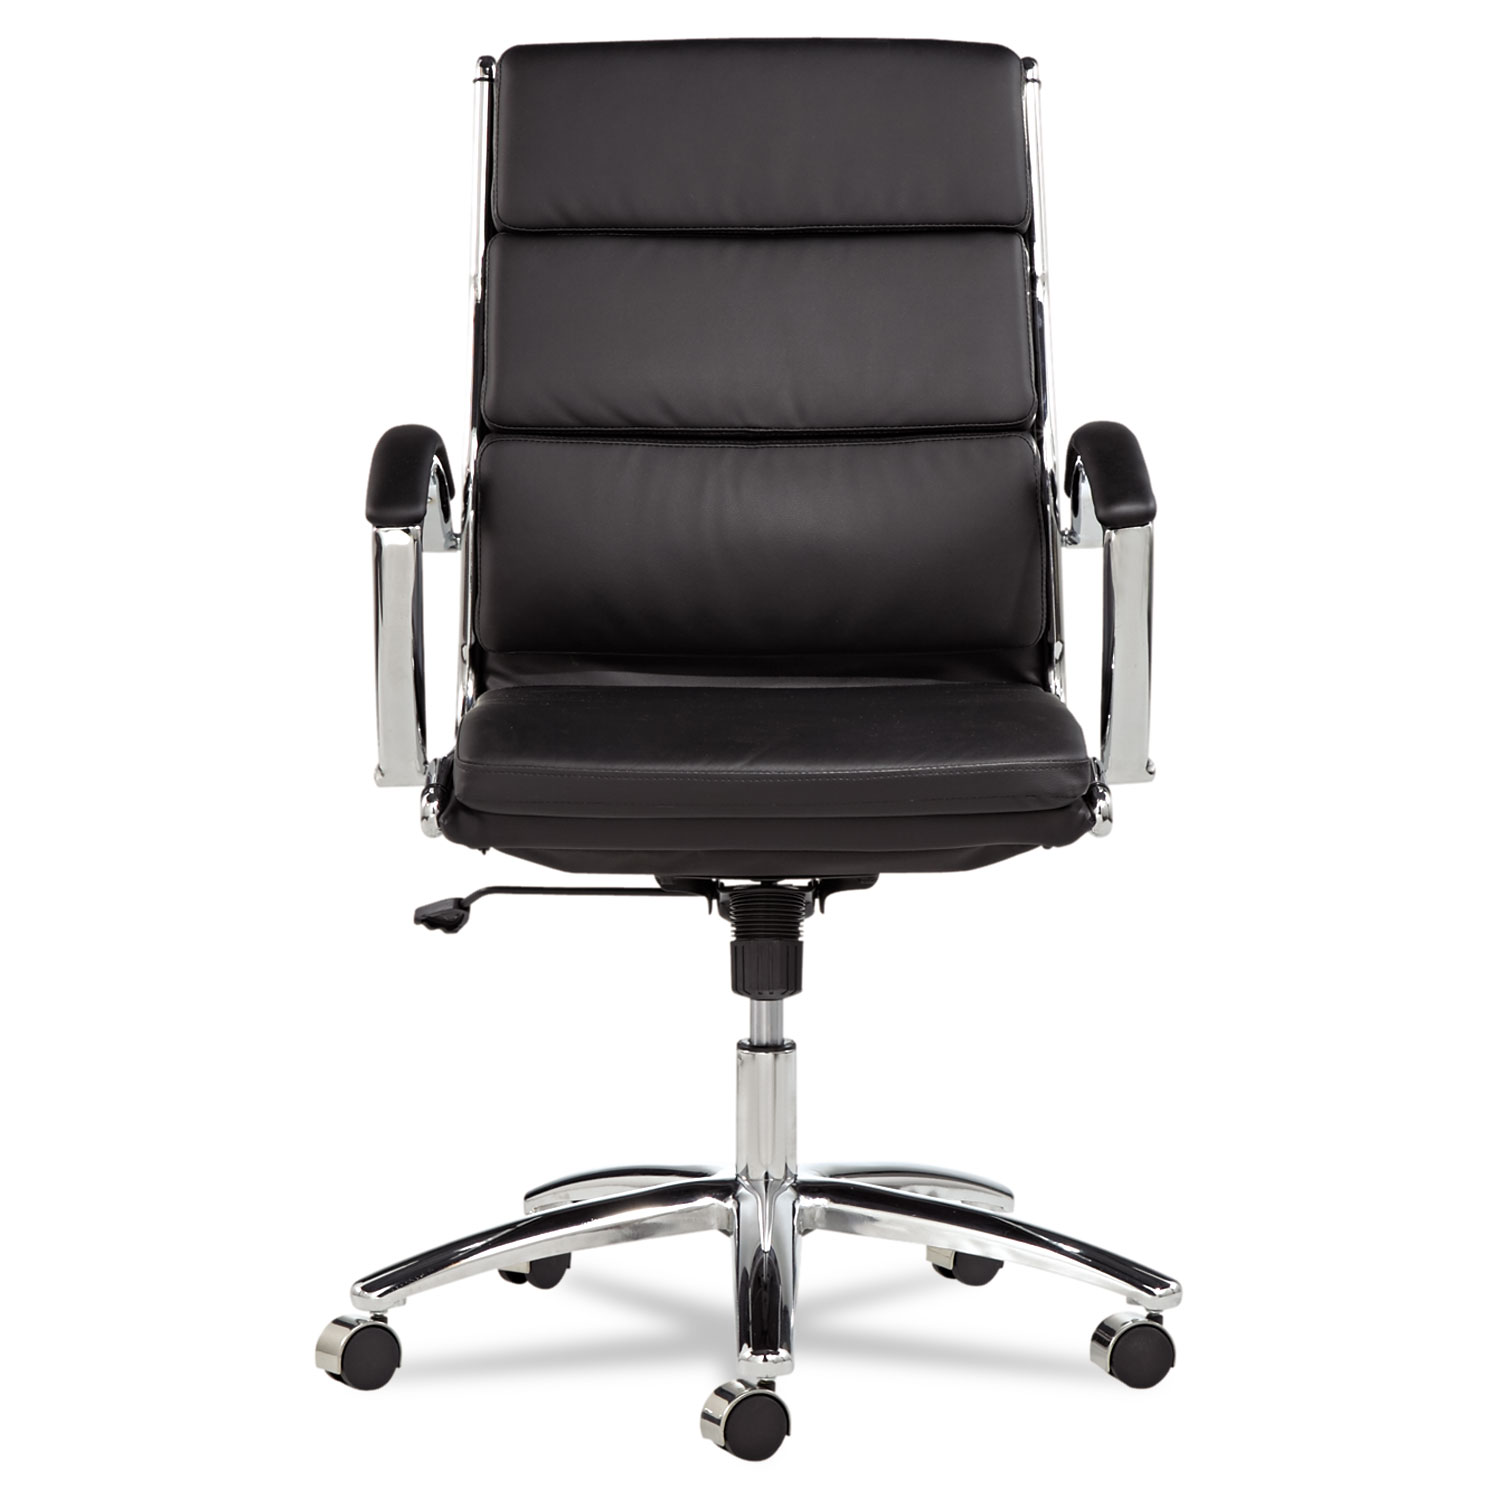 Alera Neratoli Mid-Back Slim Profile Chair, Faux Leather, Supports Up to 275 lb, Black Seat/Back, Chrome Base - image 4 of 8